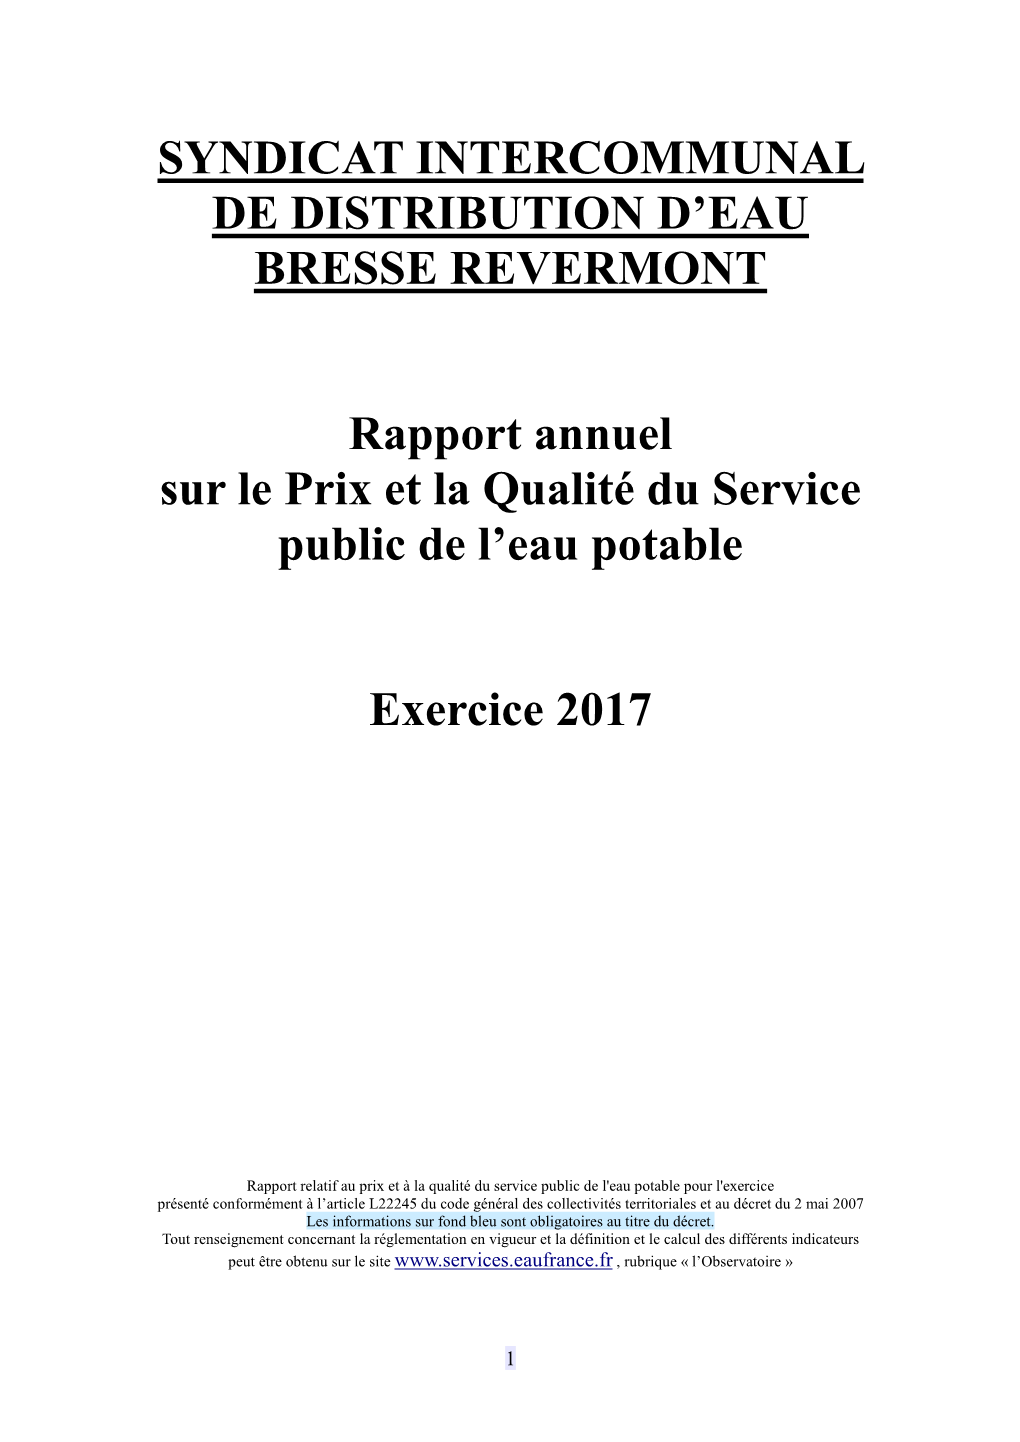 RPQS 2017 Bresse Revermont